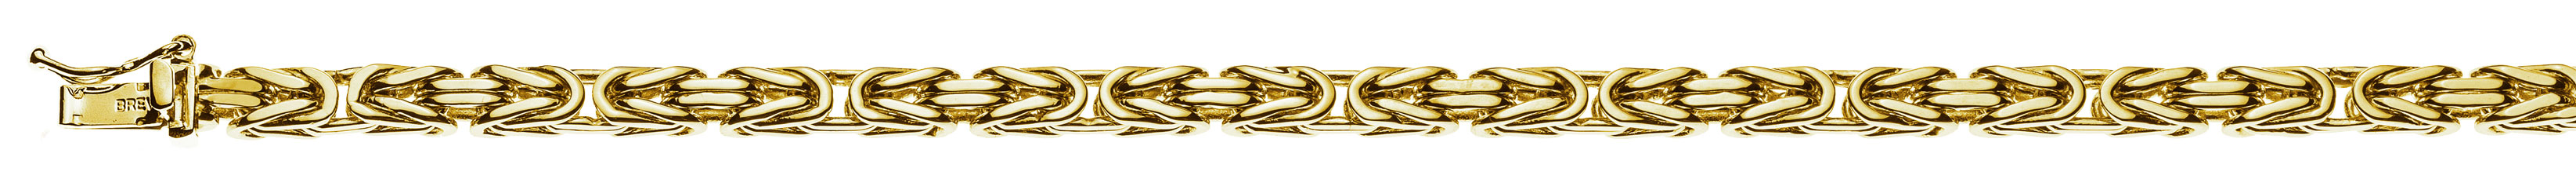 AURONOS Prestige Bracelet 18k yellow gold king chain 4mm 19cm 